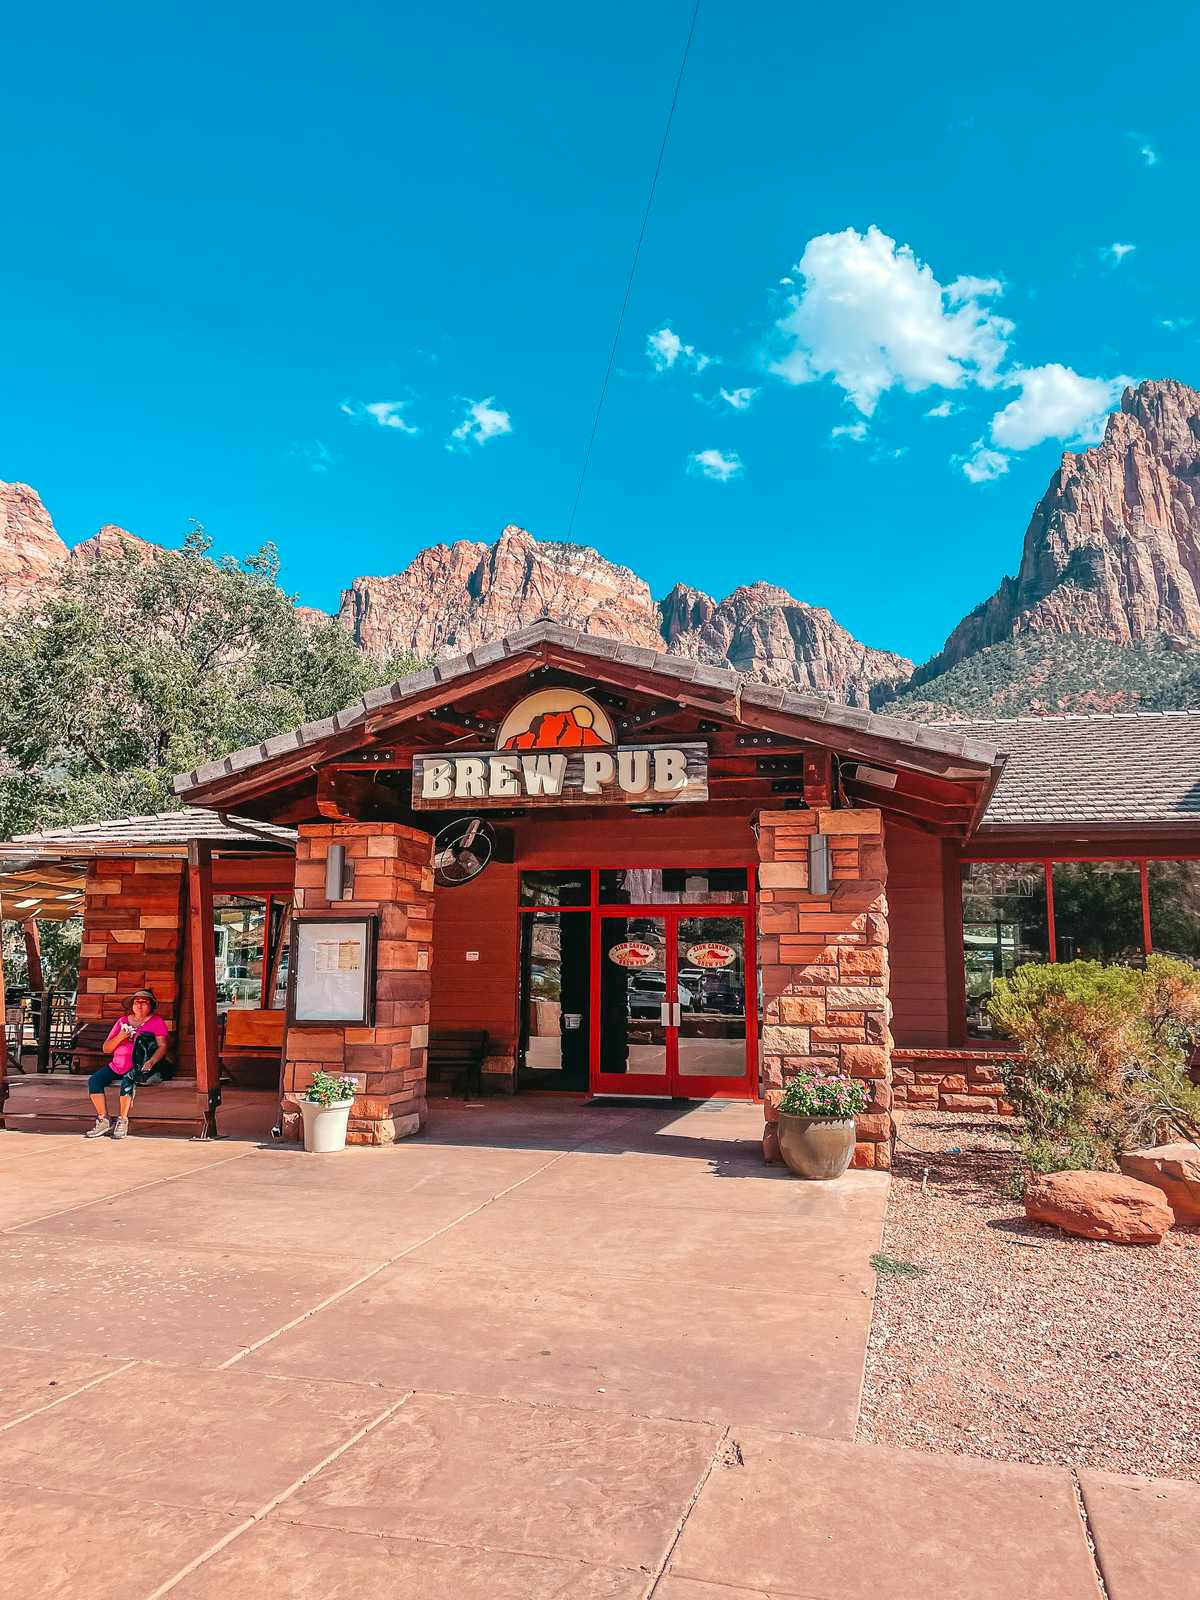 Brew Pub restaurant at Zion National Park